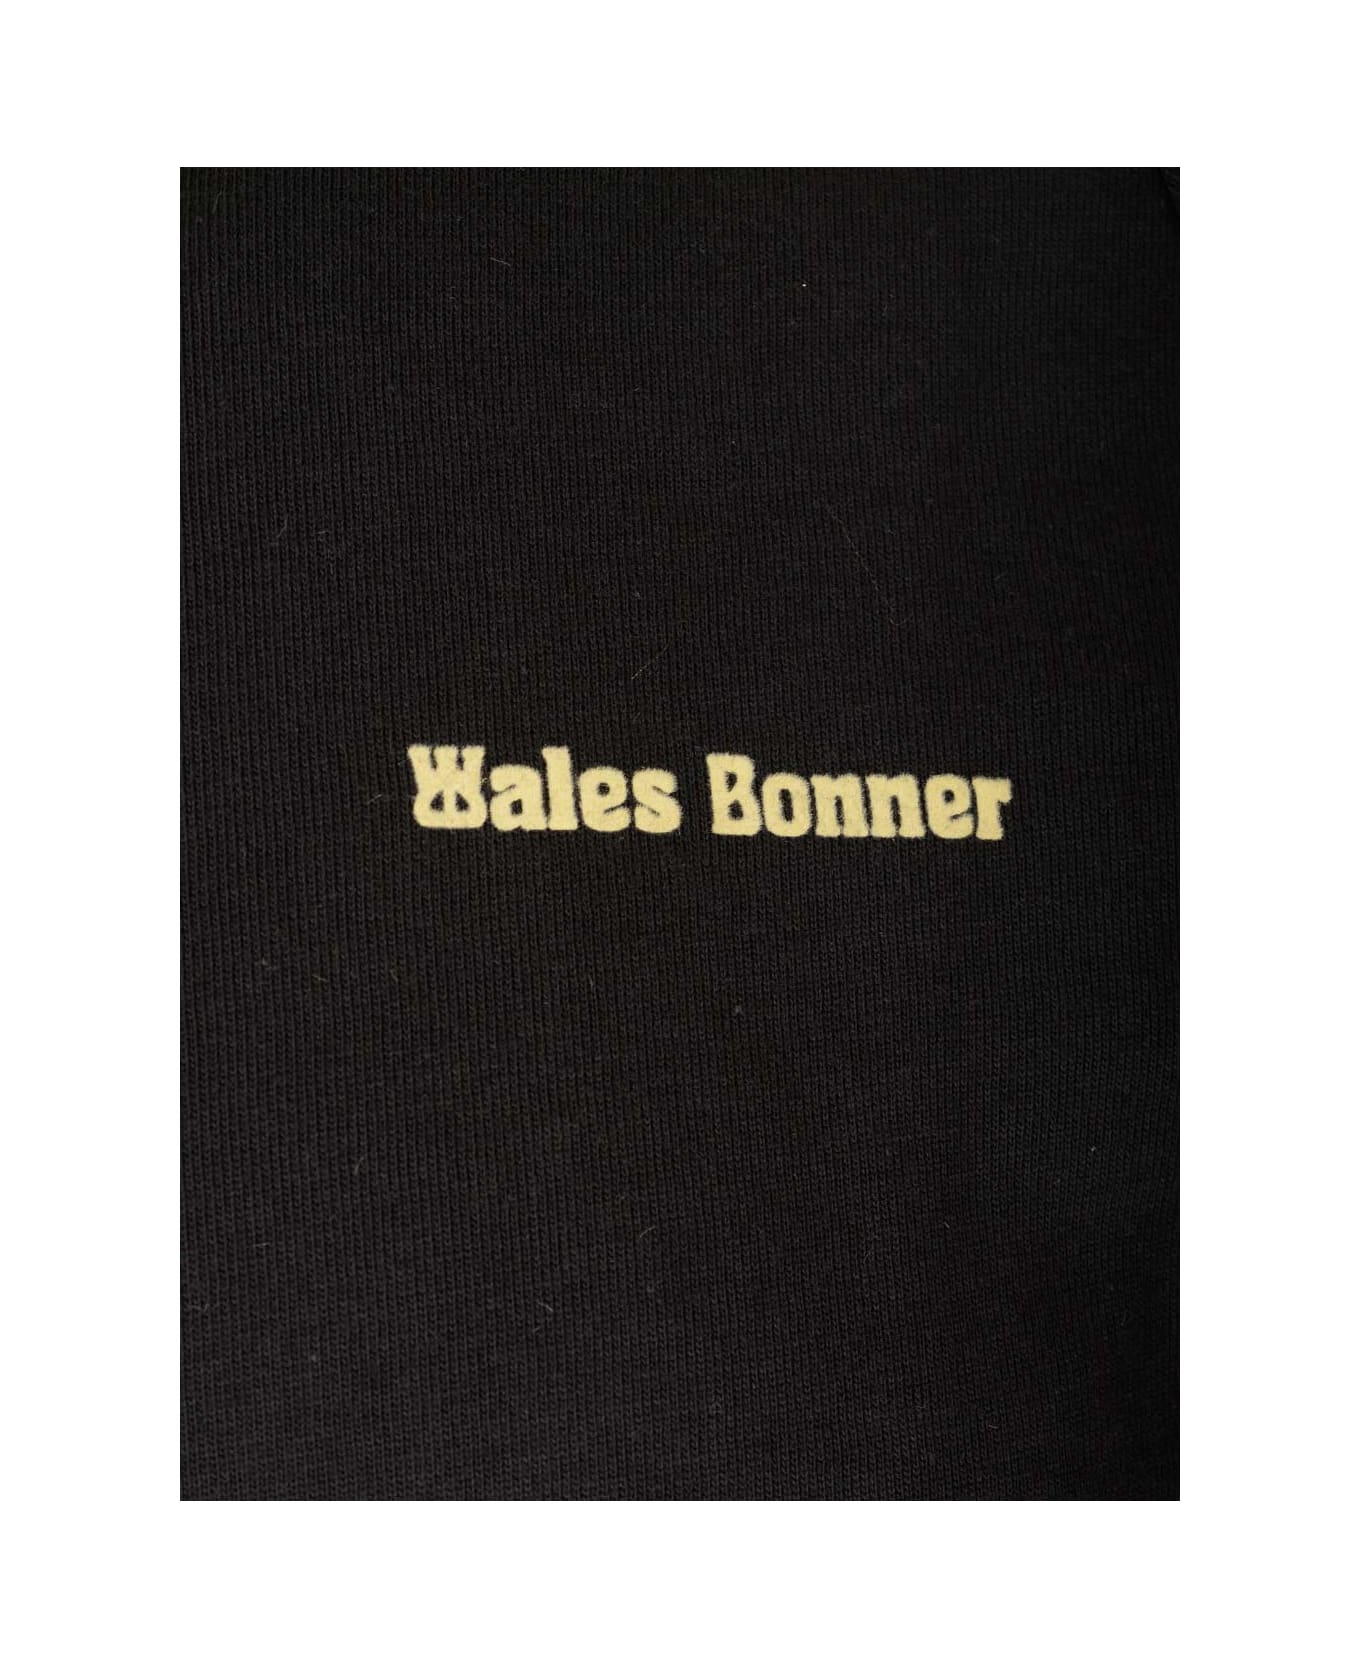 Adidas Originals by Wales Bonner Adidas X Wales Bonner T-shirt - Black